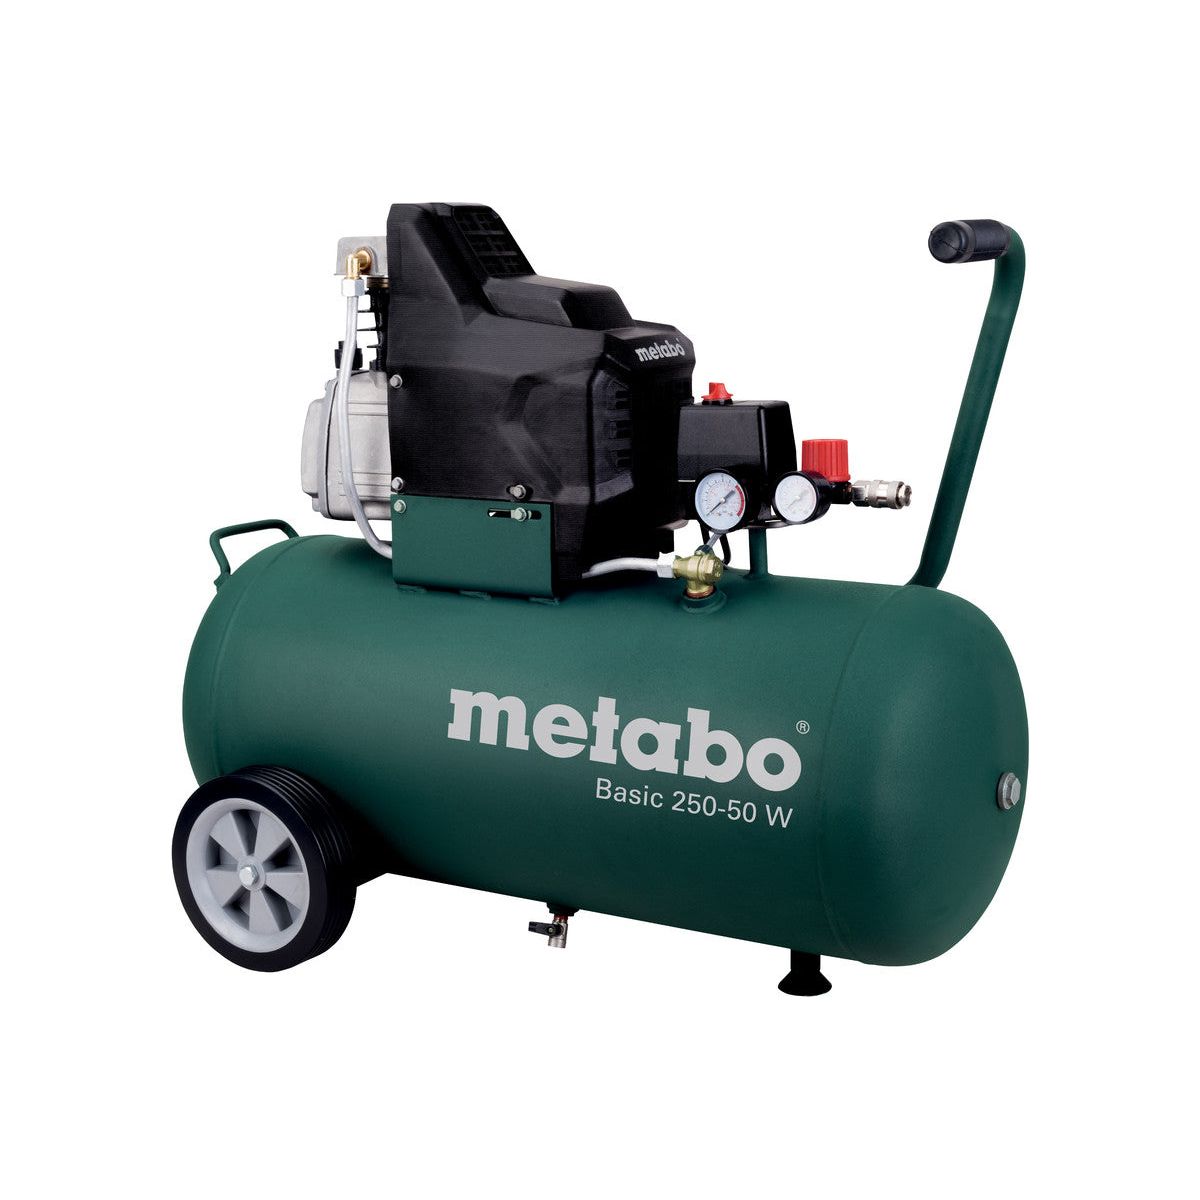 Basic 250-50 W Compresseur Metabo